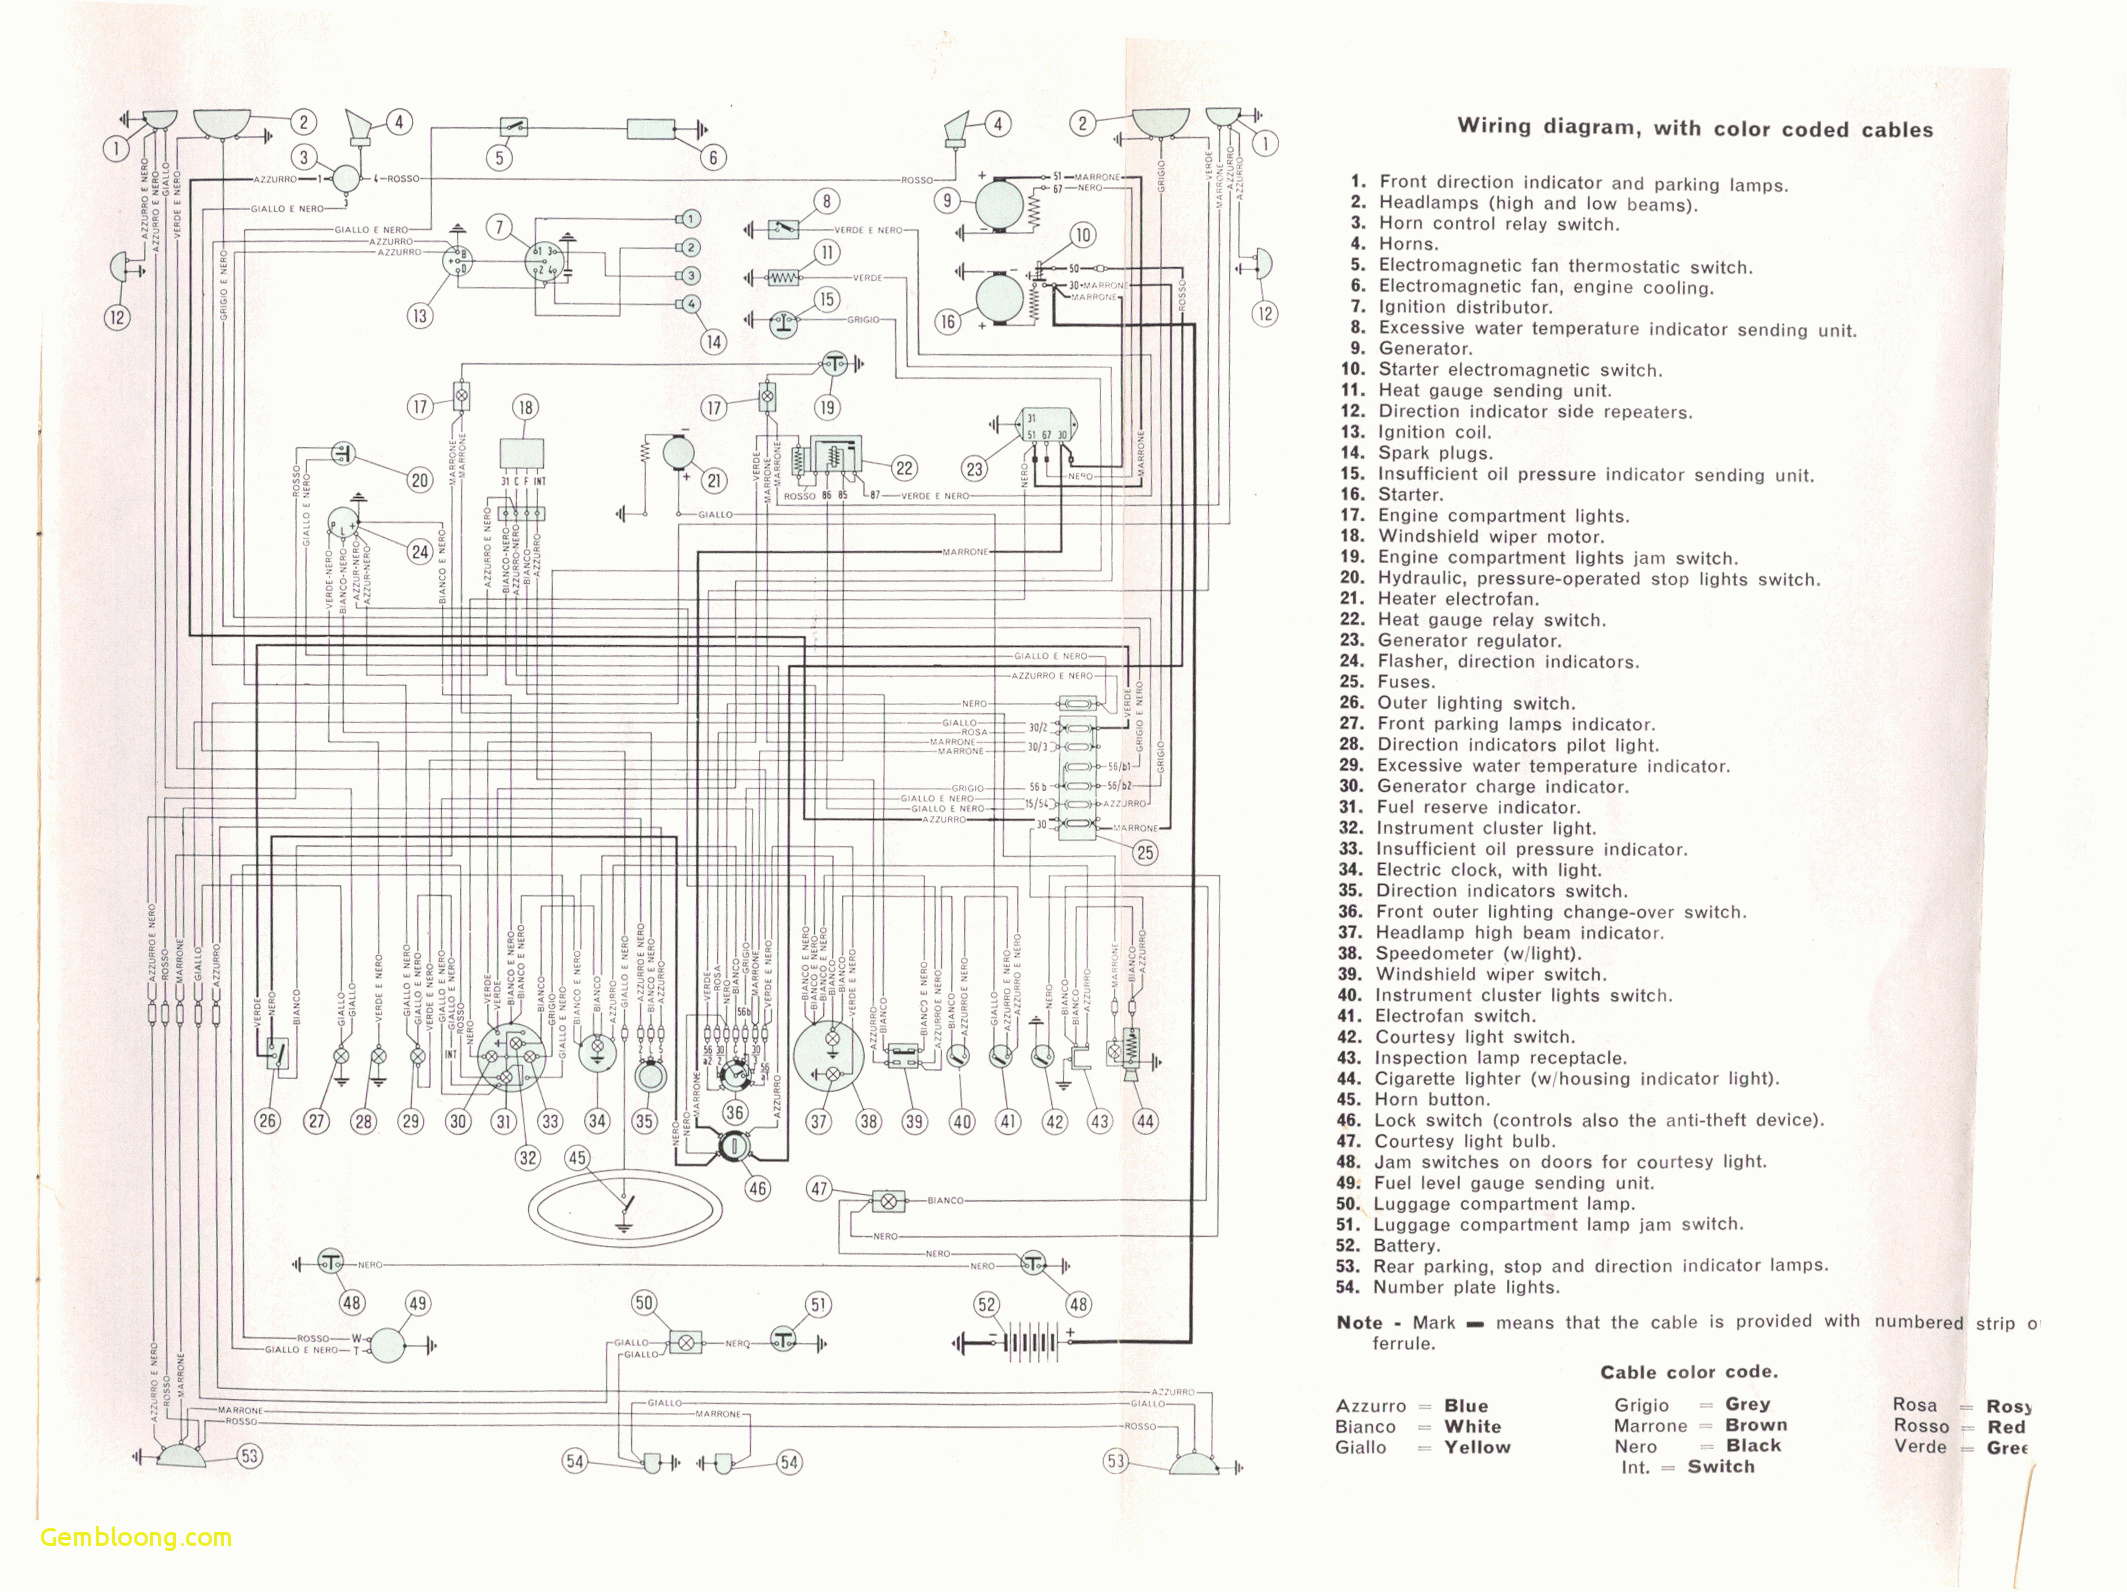 Wiring Diagram For B | Wiring Diagram - Cat 5 Wiring Diagram B